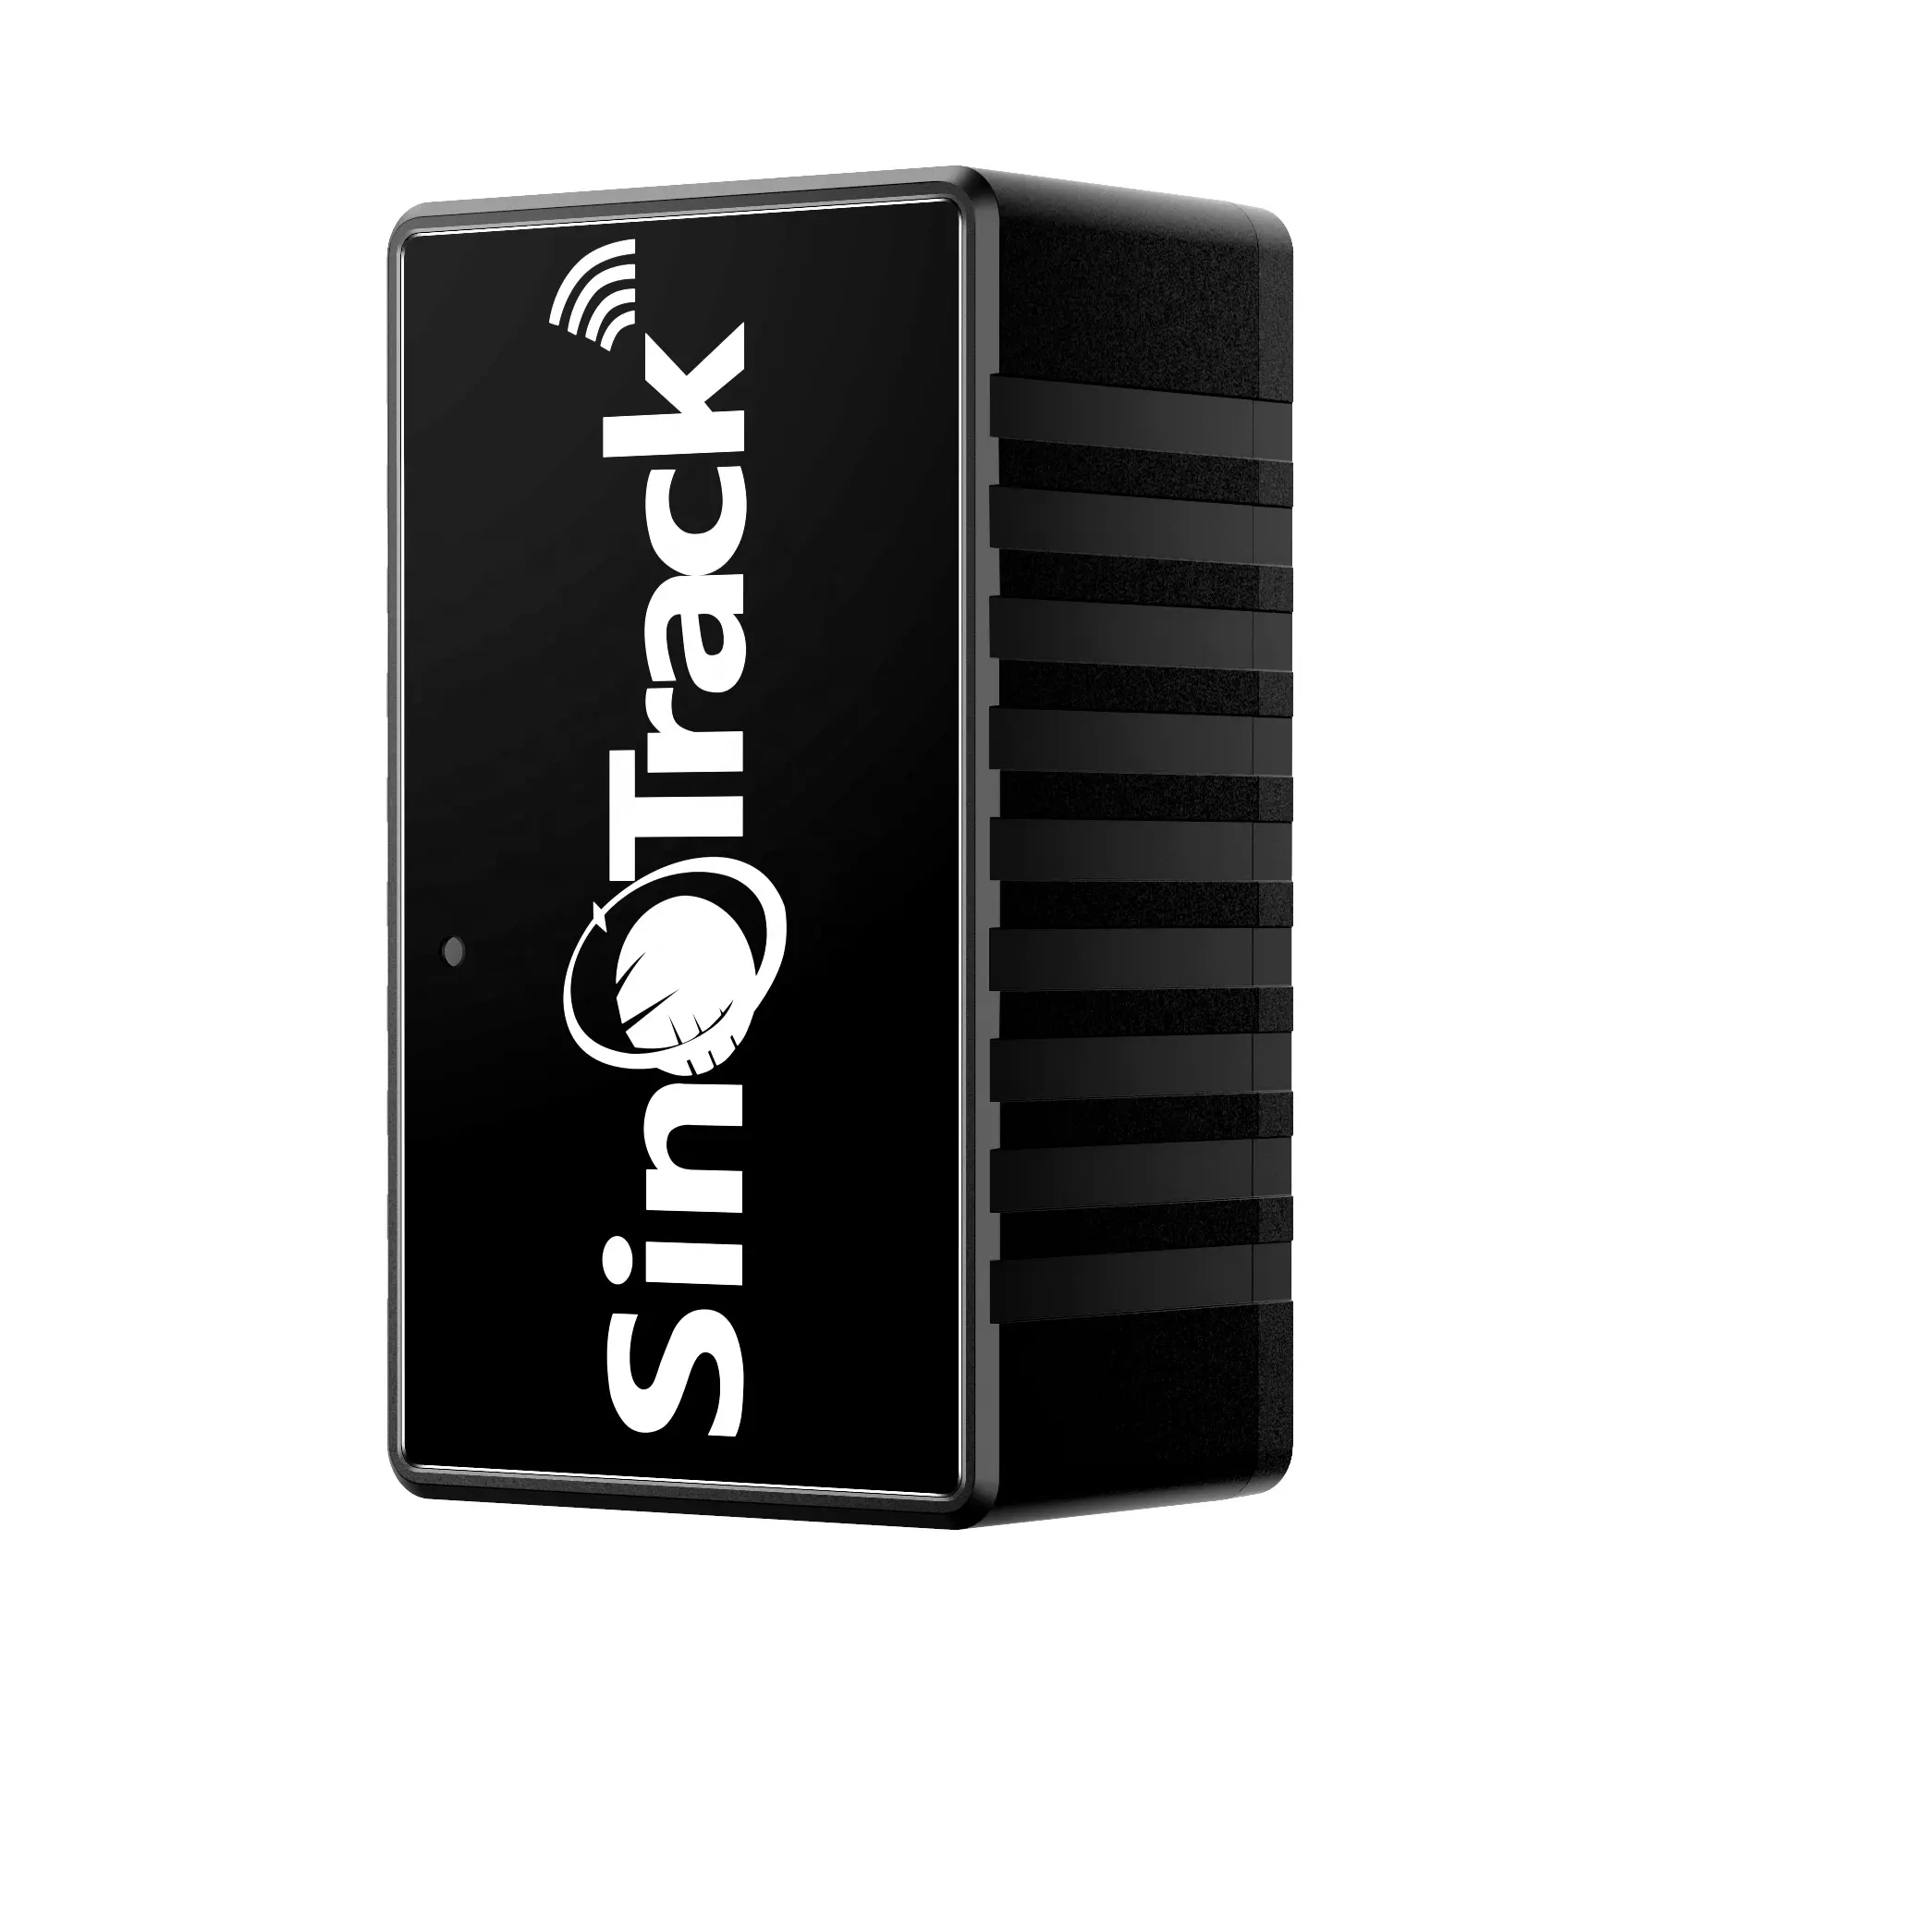 SinoTrack ST-903 Real Time Tracking Device Mini Locator Google Map Waterproof IP67 GPS Tracker